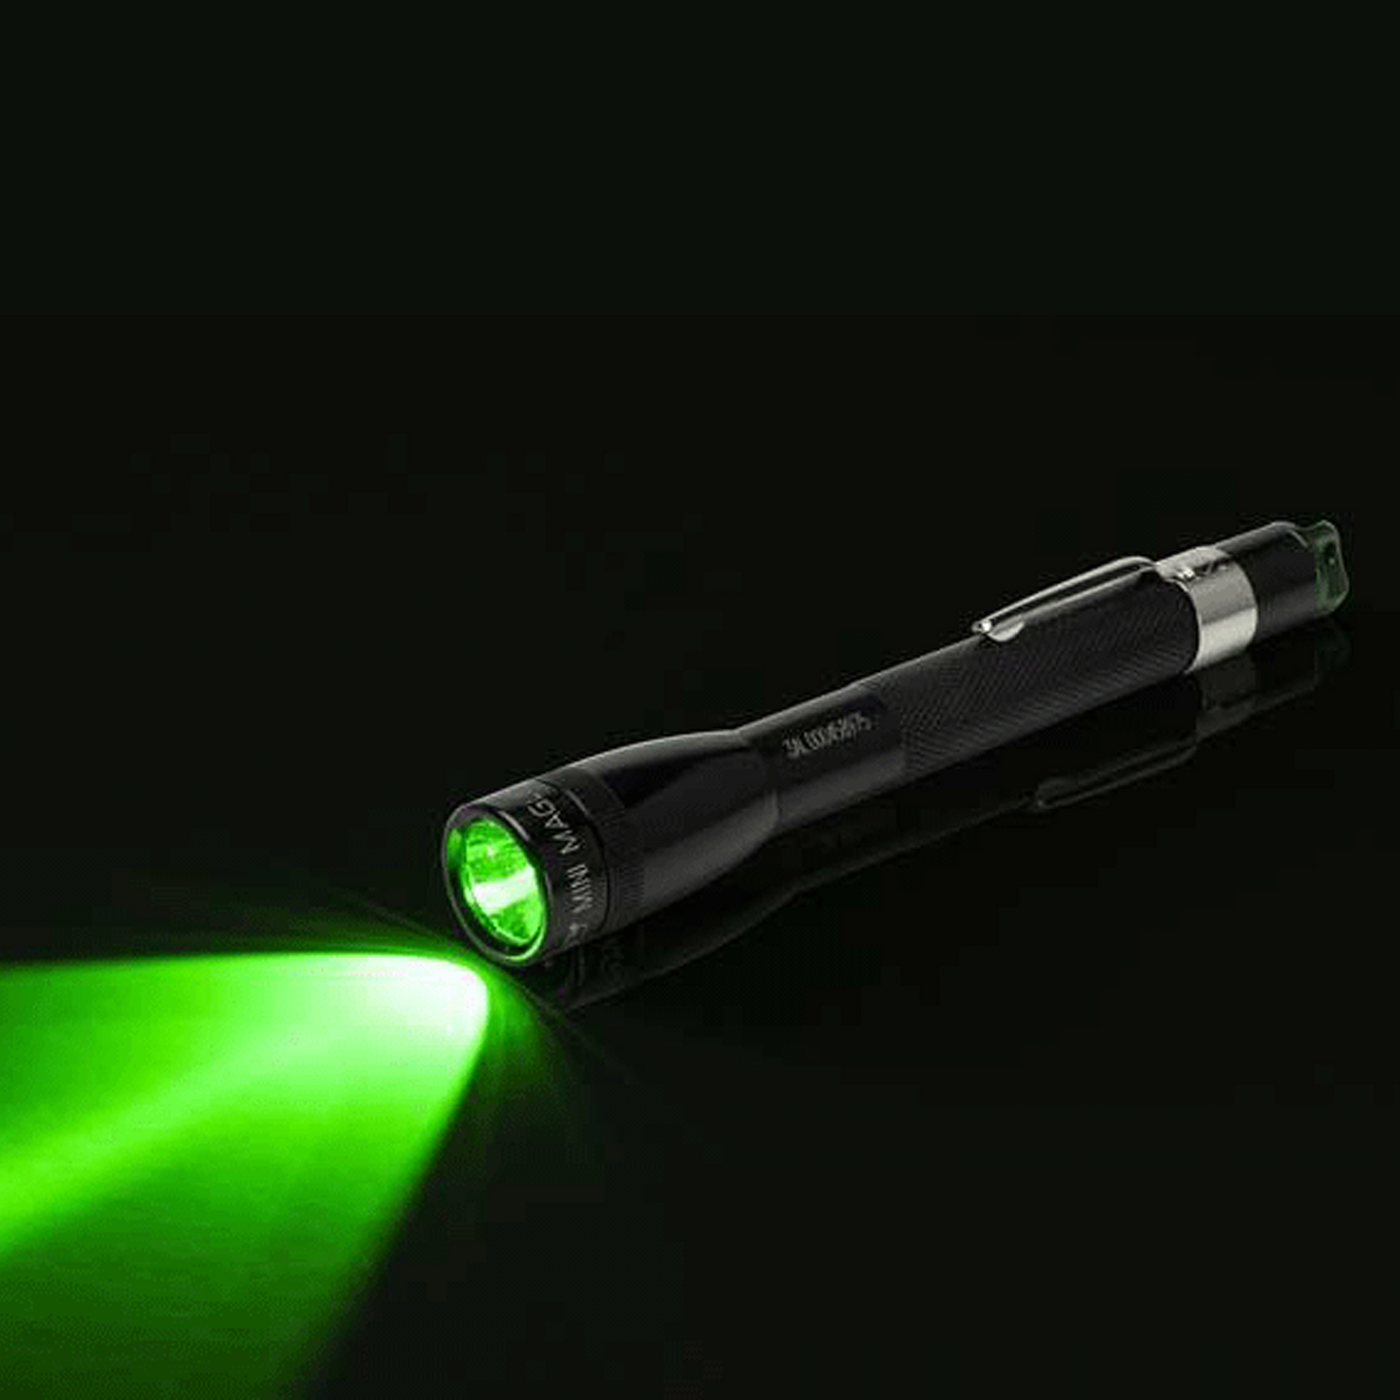 Mini Maglite AAA LED Green Spectrum pocket flashlight